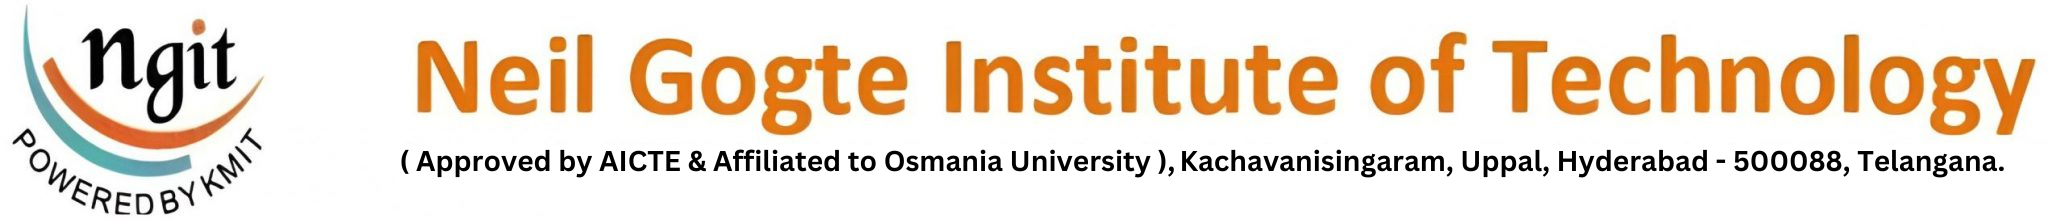 Logo for Neil Gogte Institute of Technology